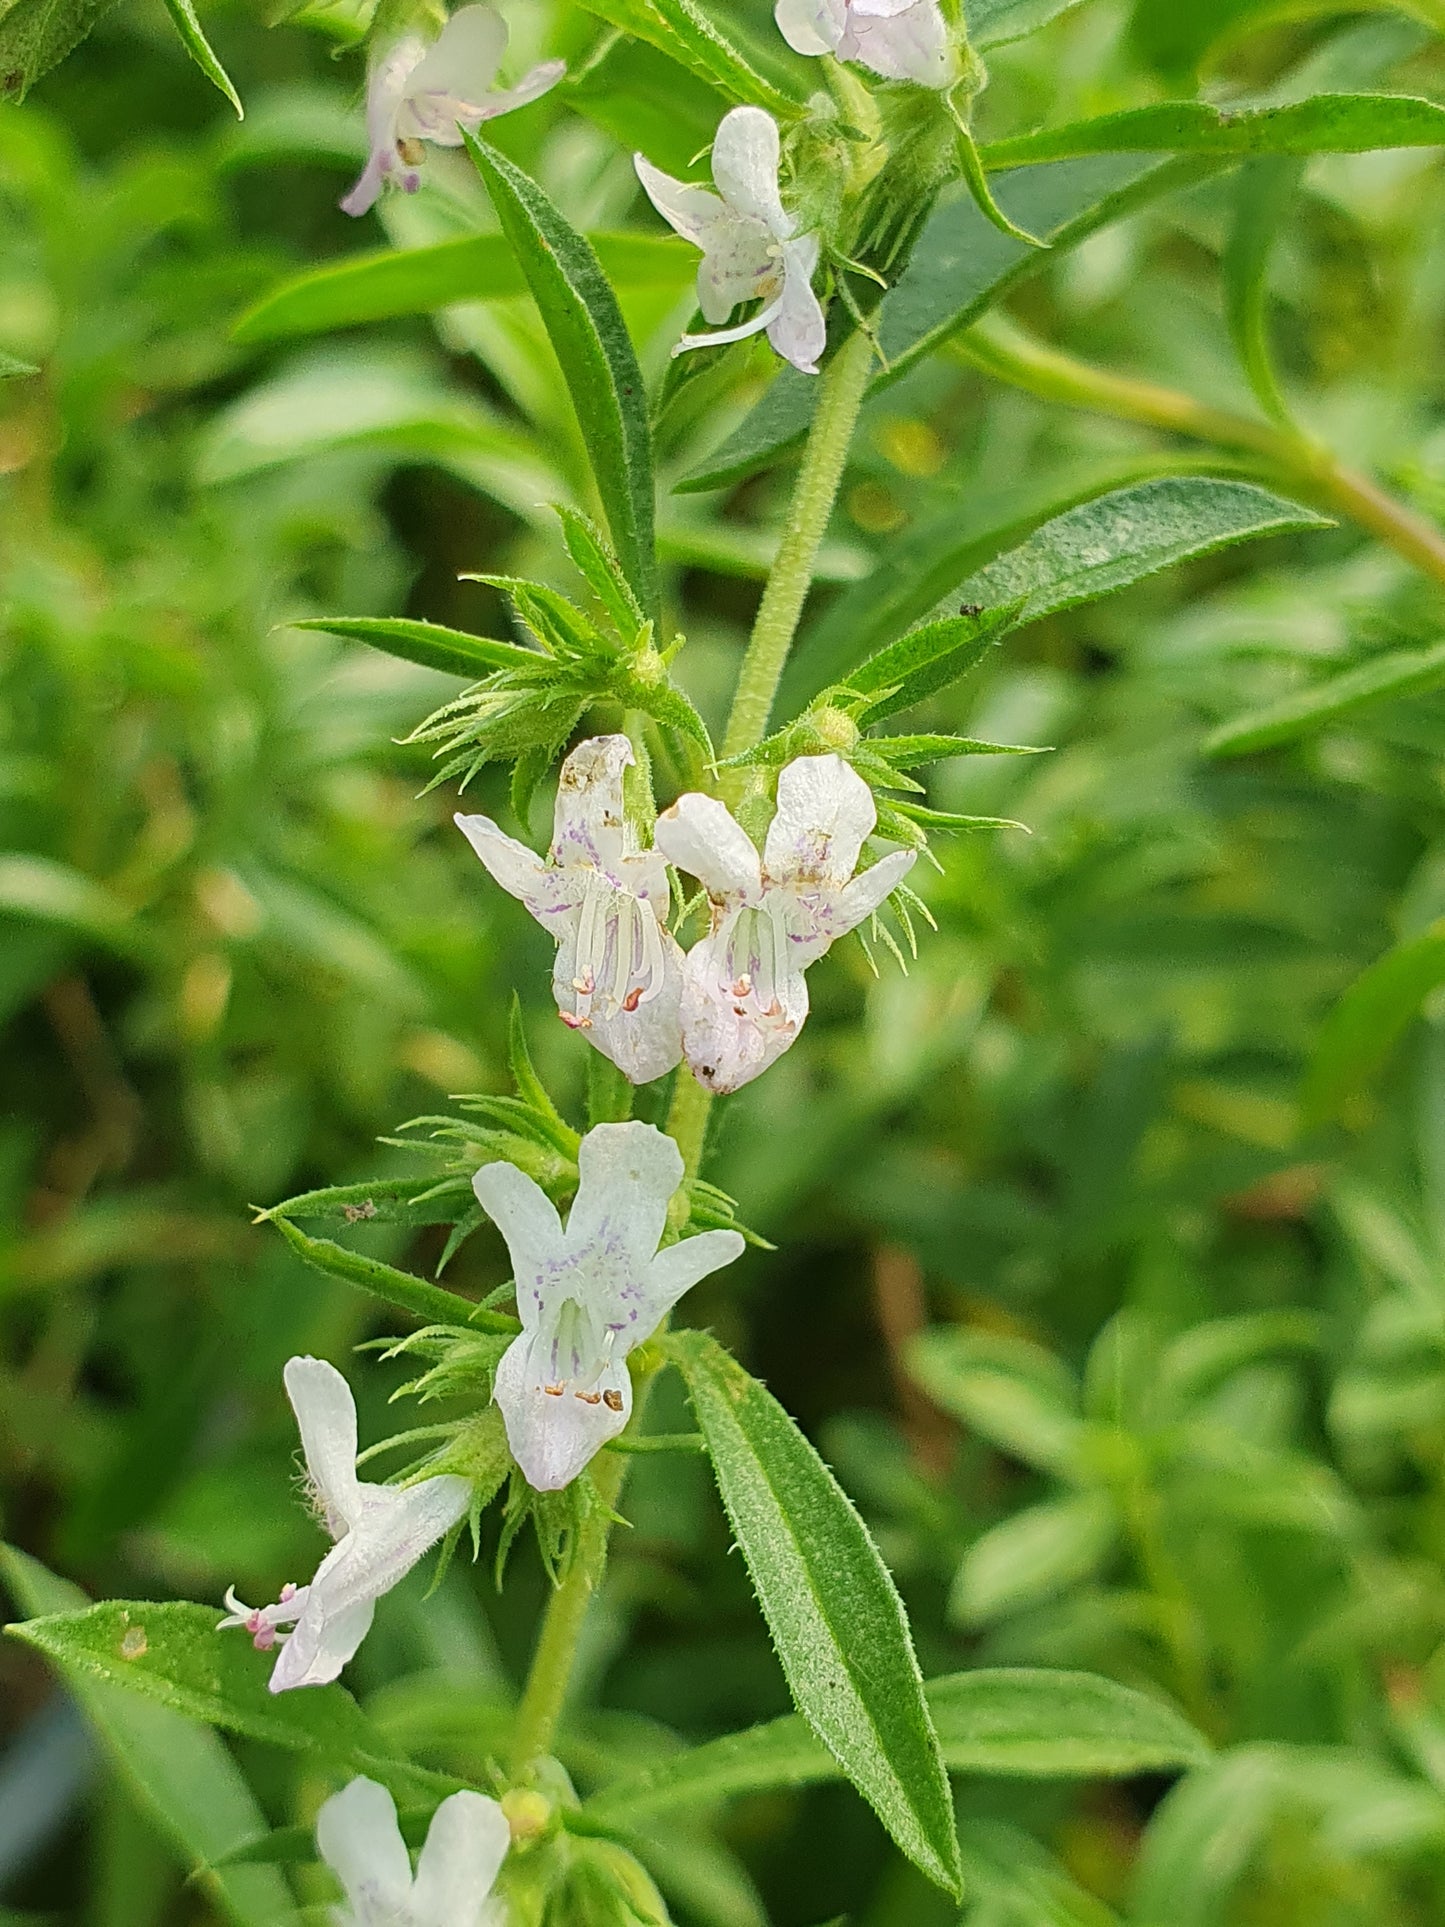 Bio Bohnenkraut (Bergbohnenkraut) (Satureja montana) - Topfpflanze